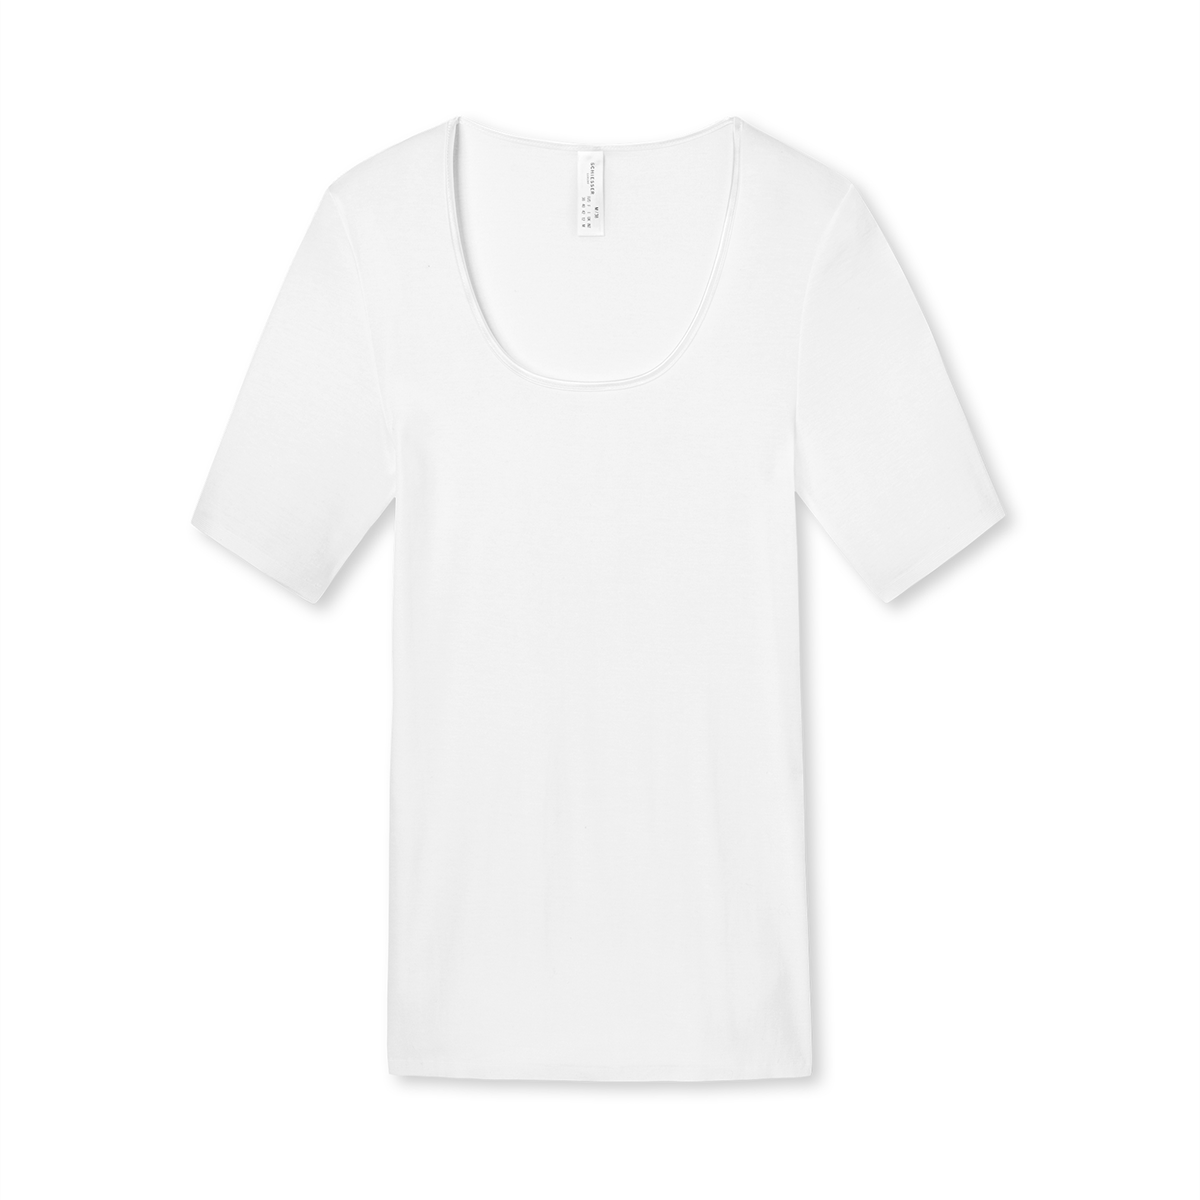 Se Schiesser T-shirt, Farve: Hvid, Størrelse: 42, Dame hos Netlingeri.dk